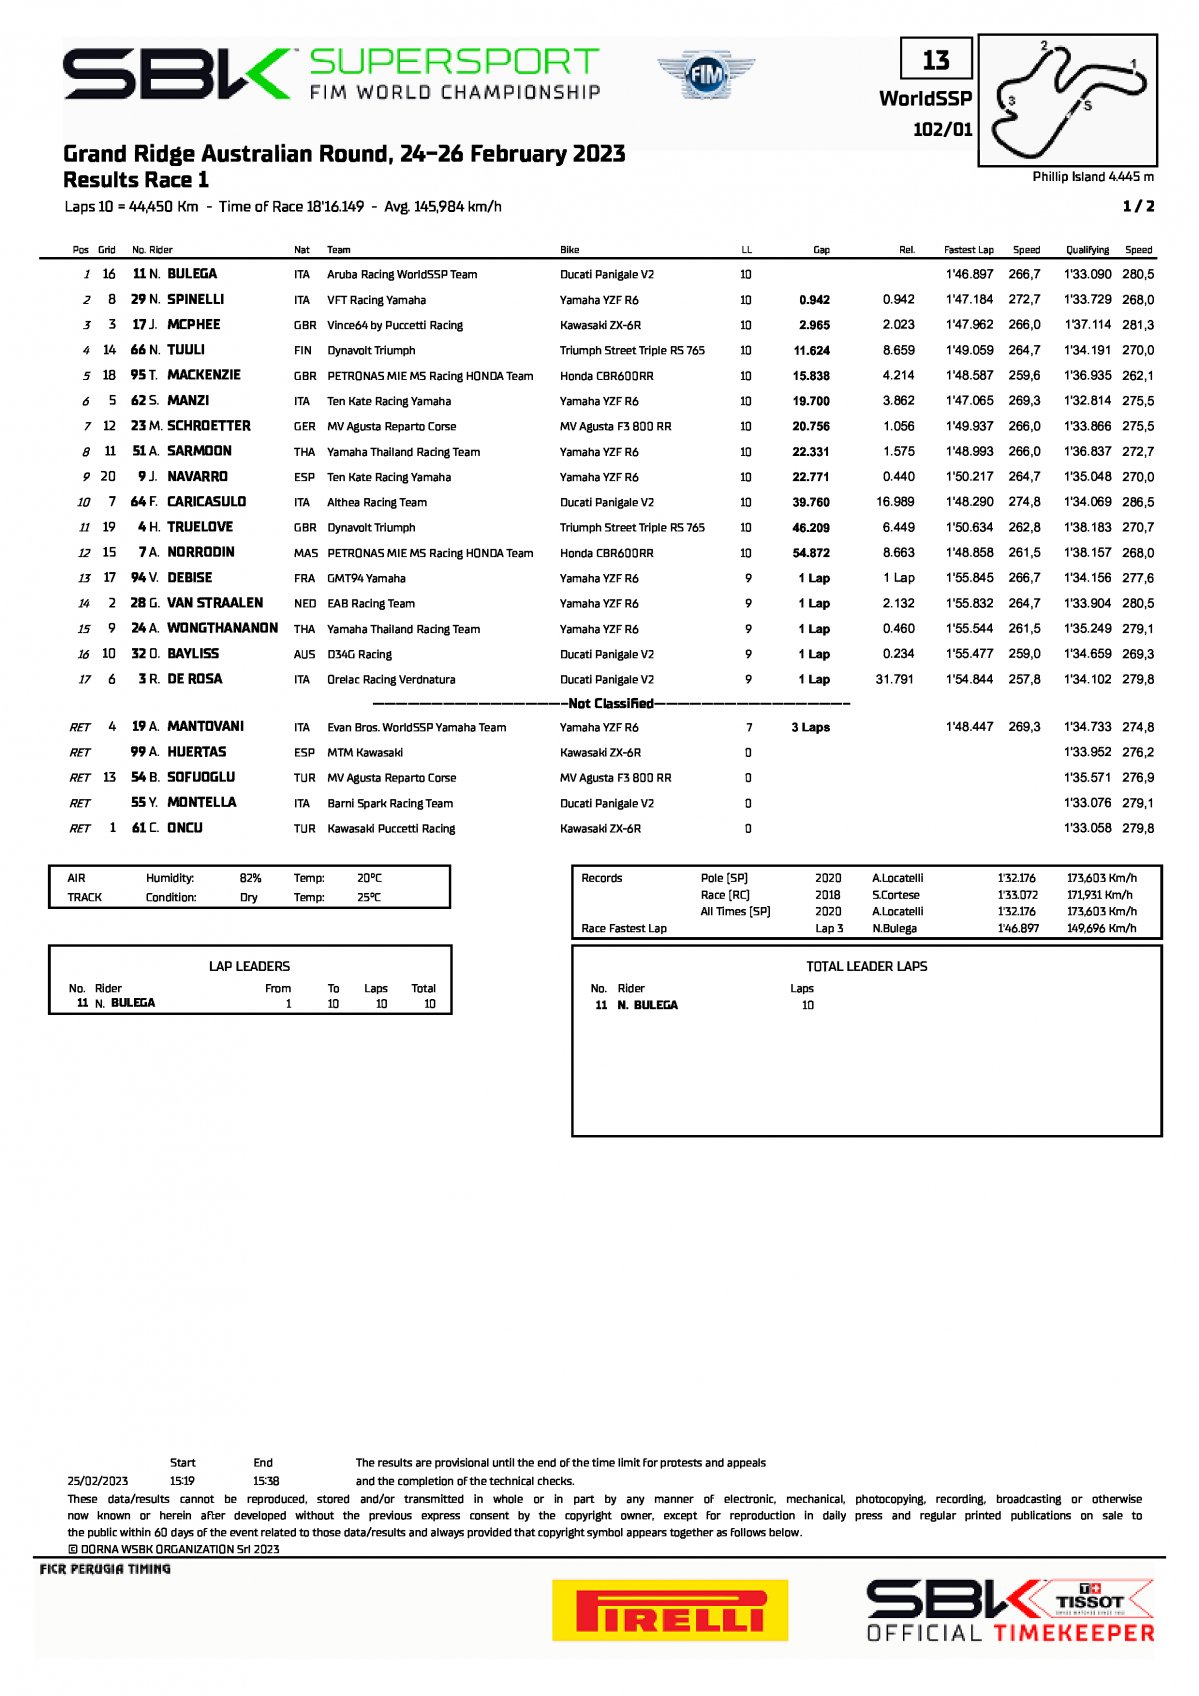 Результаты 1 гонки AUSWorldSBK, World Supersport, Phillip Island (25/02/2023)